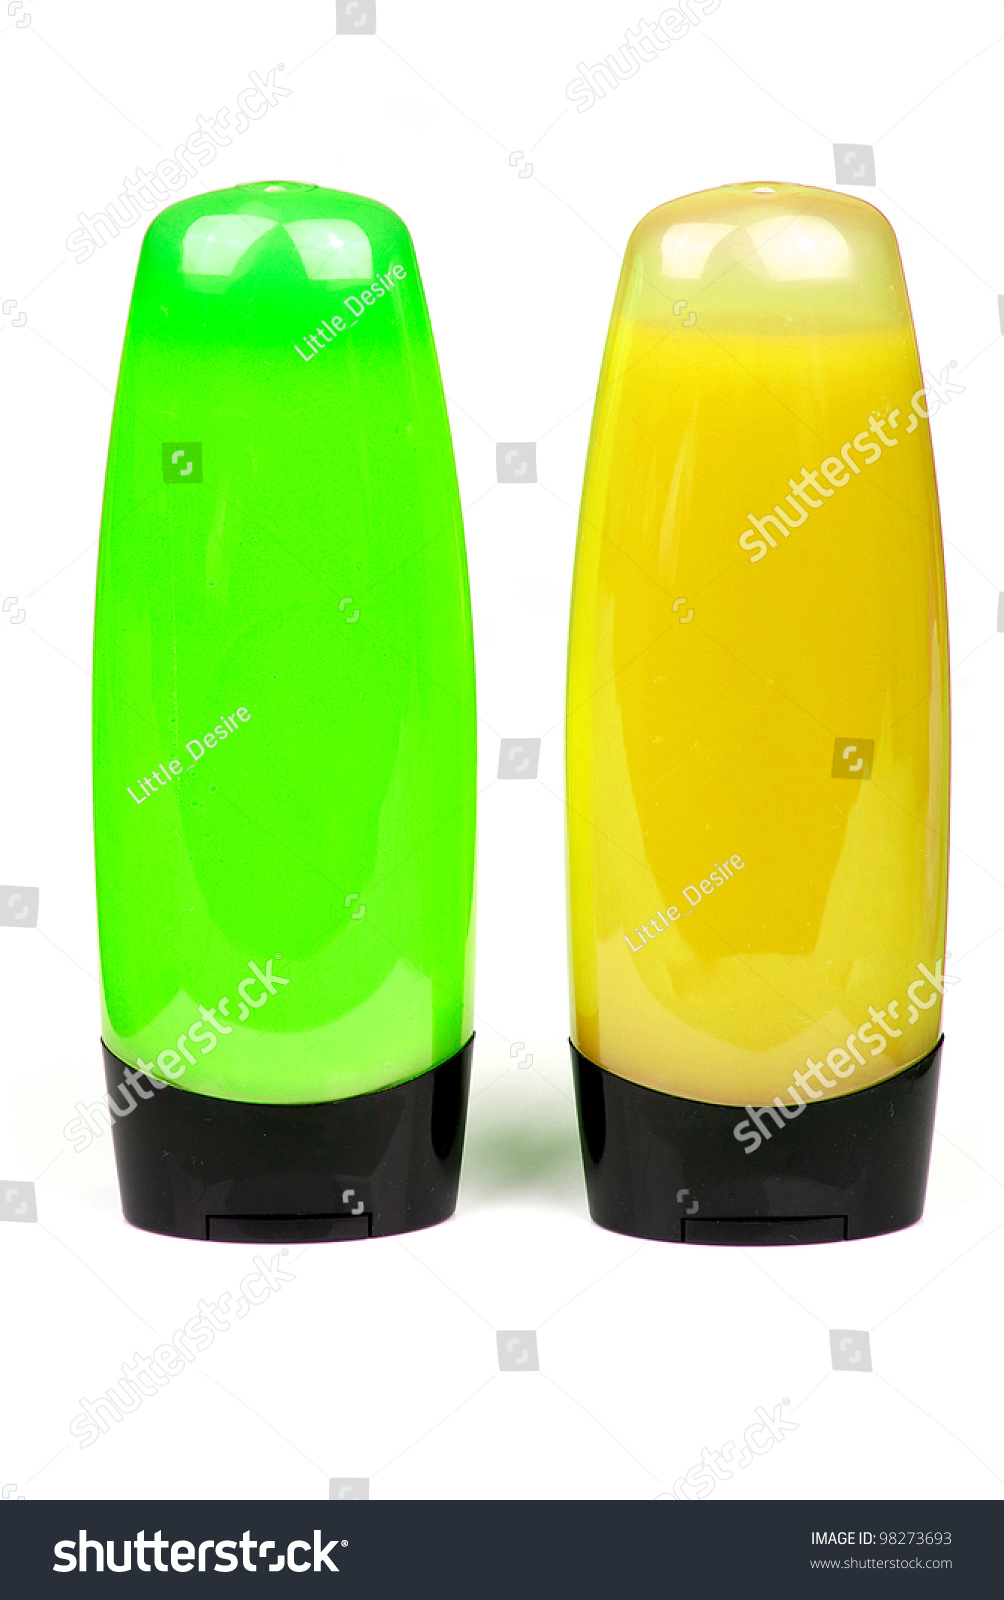 Download Yellow Green Colored Shower Gel Bottles Transportation Healthcare Medical Stock Image PSD Mockup Templates